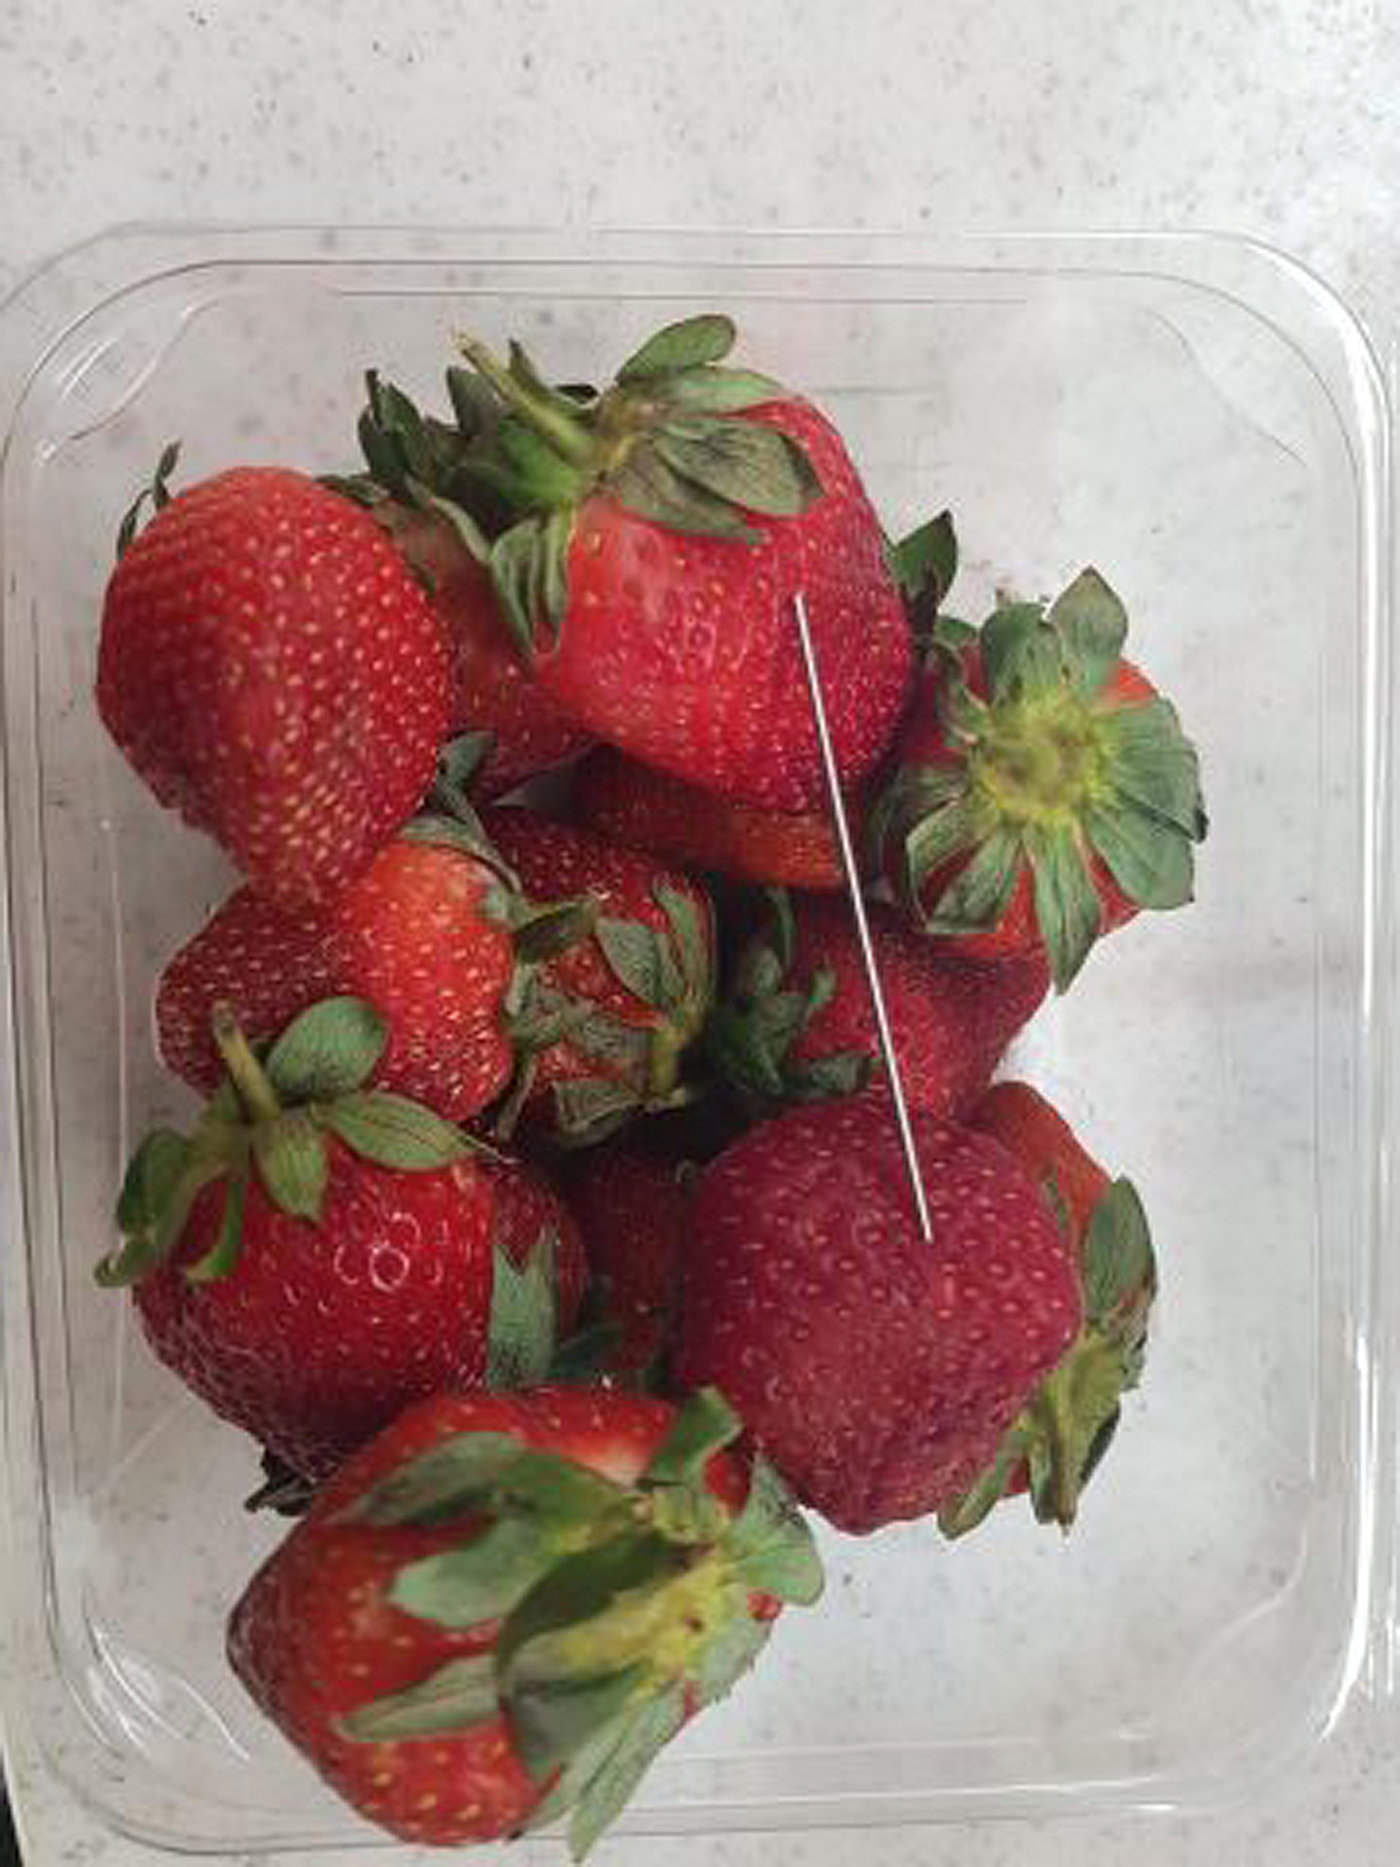 Strawberries spook Australia into raising jail terms for food tampering